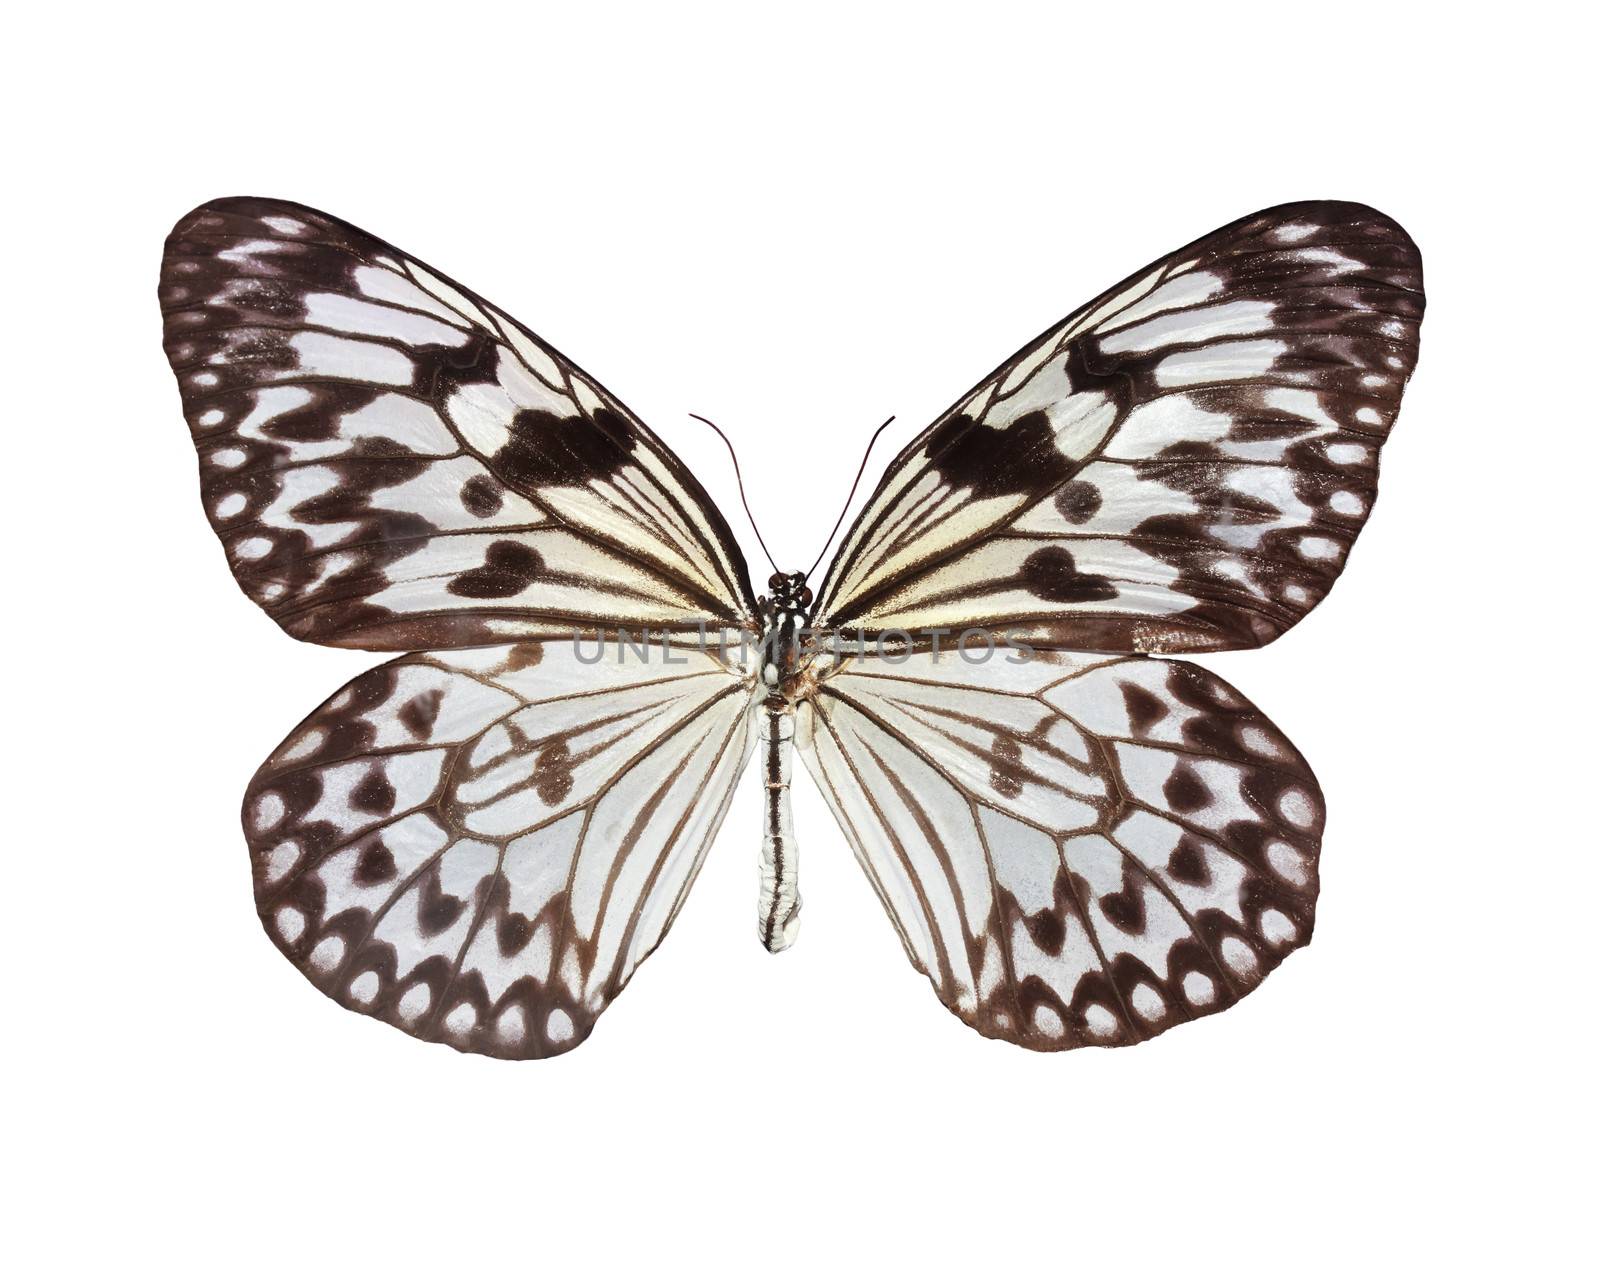 The Paper Kite butterfly by melpomene